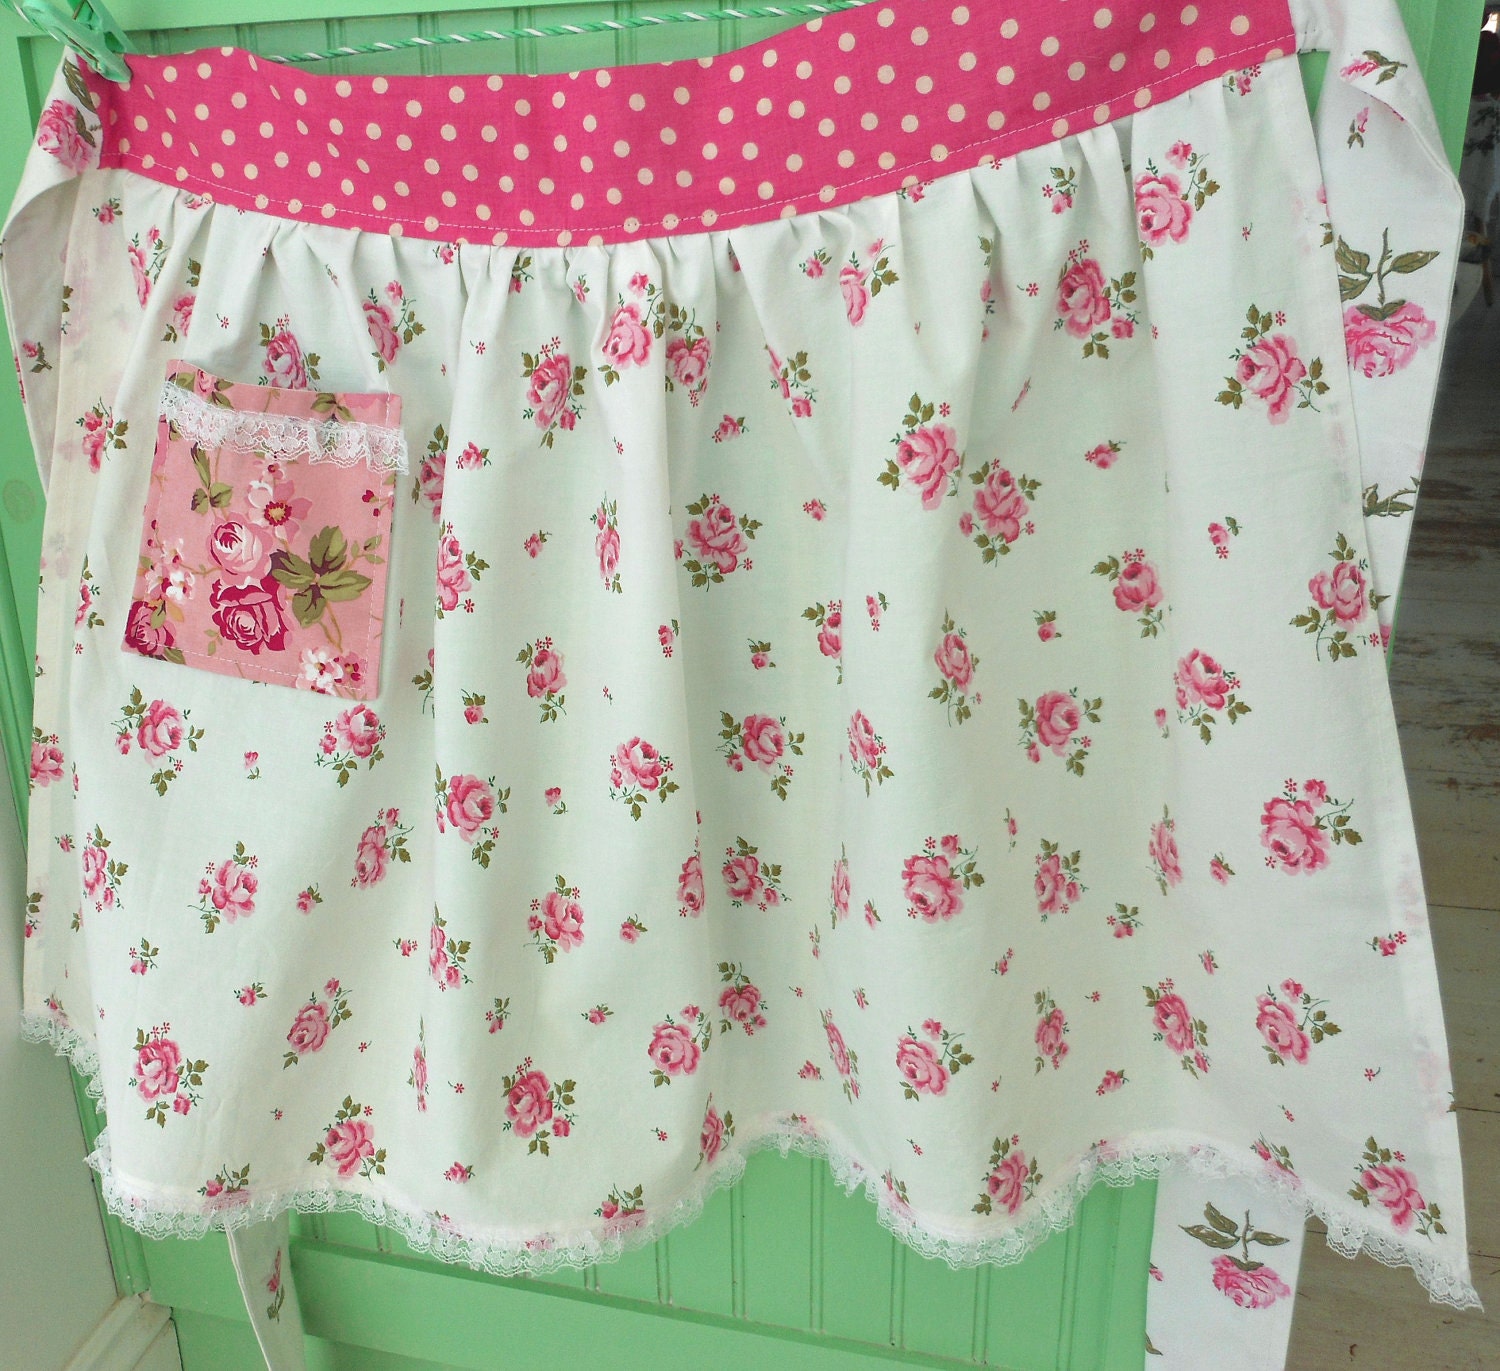 rosey apron NEW made of VINTAGE rose fabrics lace polkadot cottage chic farmhouse